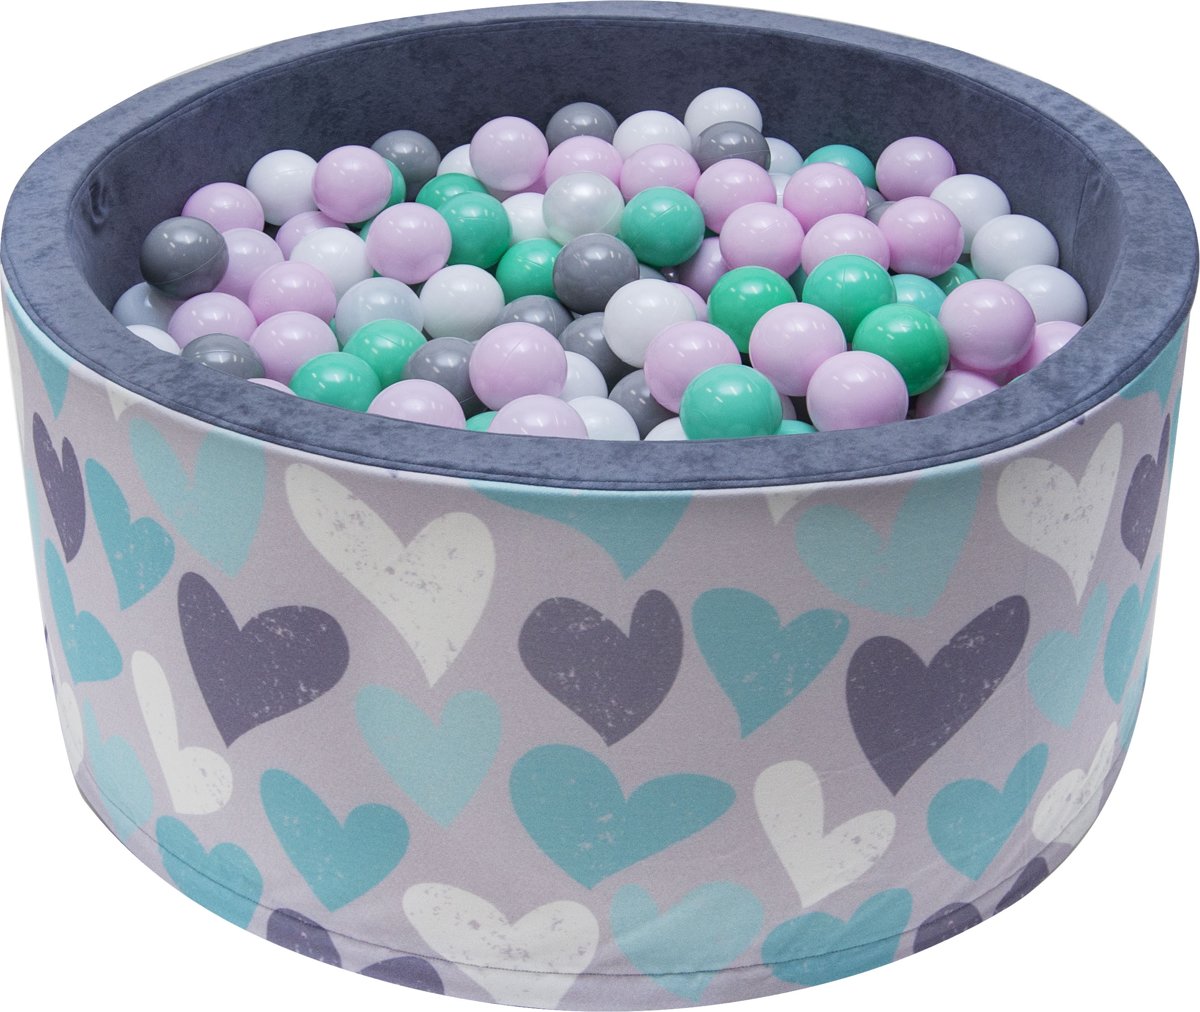 Ballenbak | Hartjes incl.  200 witte, grijze, roze en groene ballen